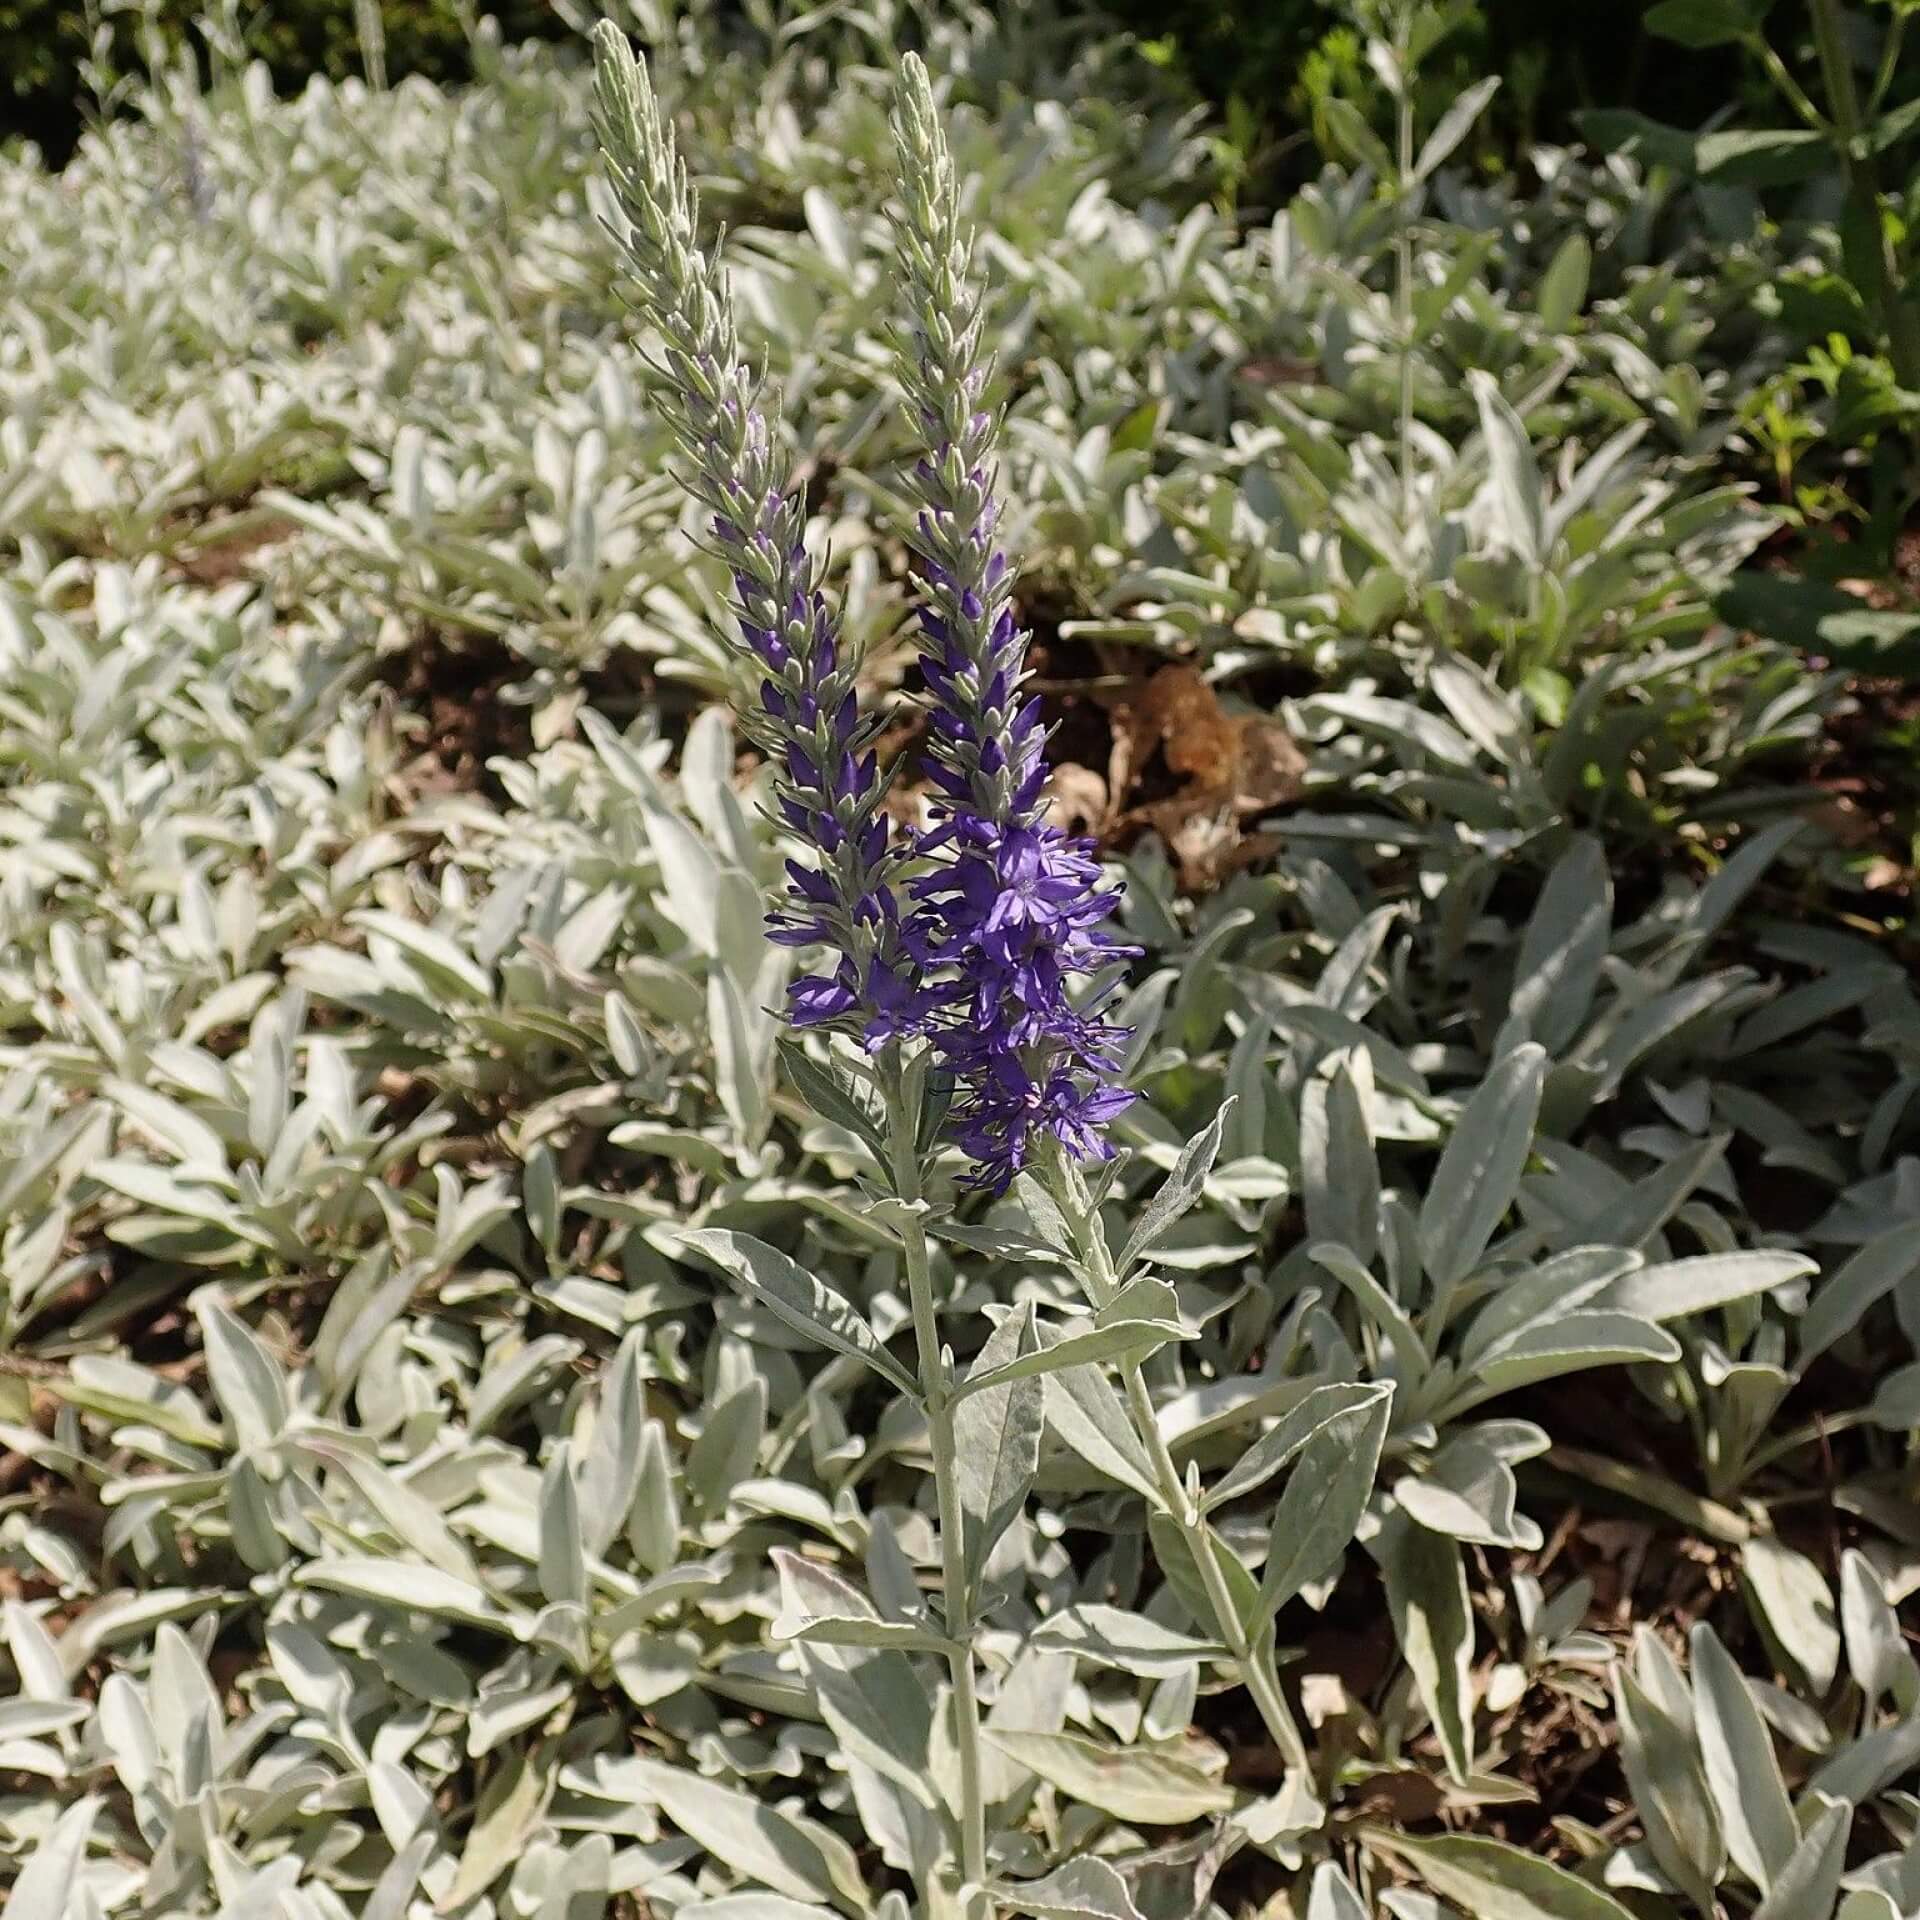 Silberpolster-Ehrenpreis (Veronica spicata subsp. incana 'Silberteppich')